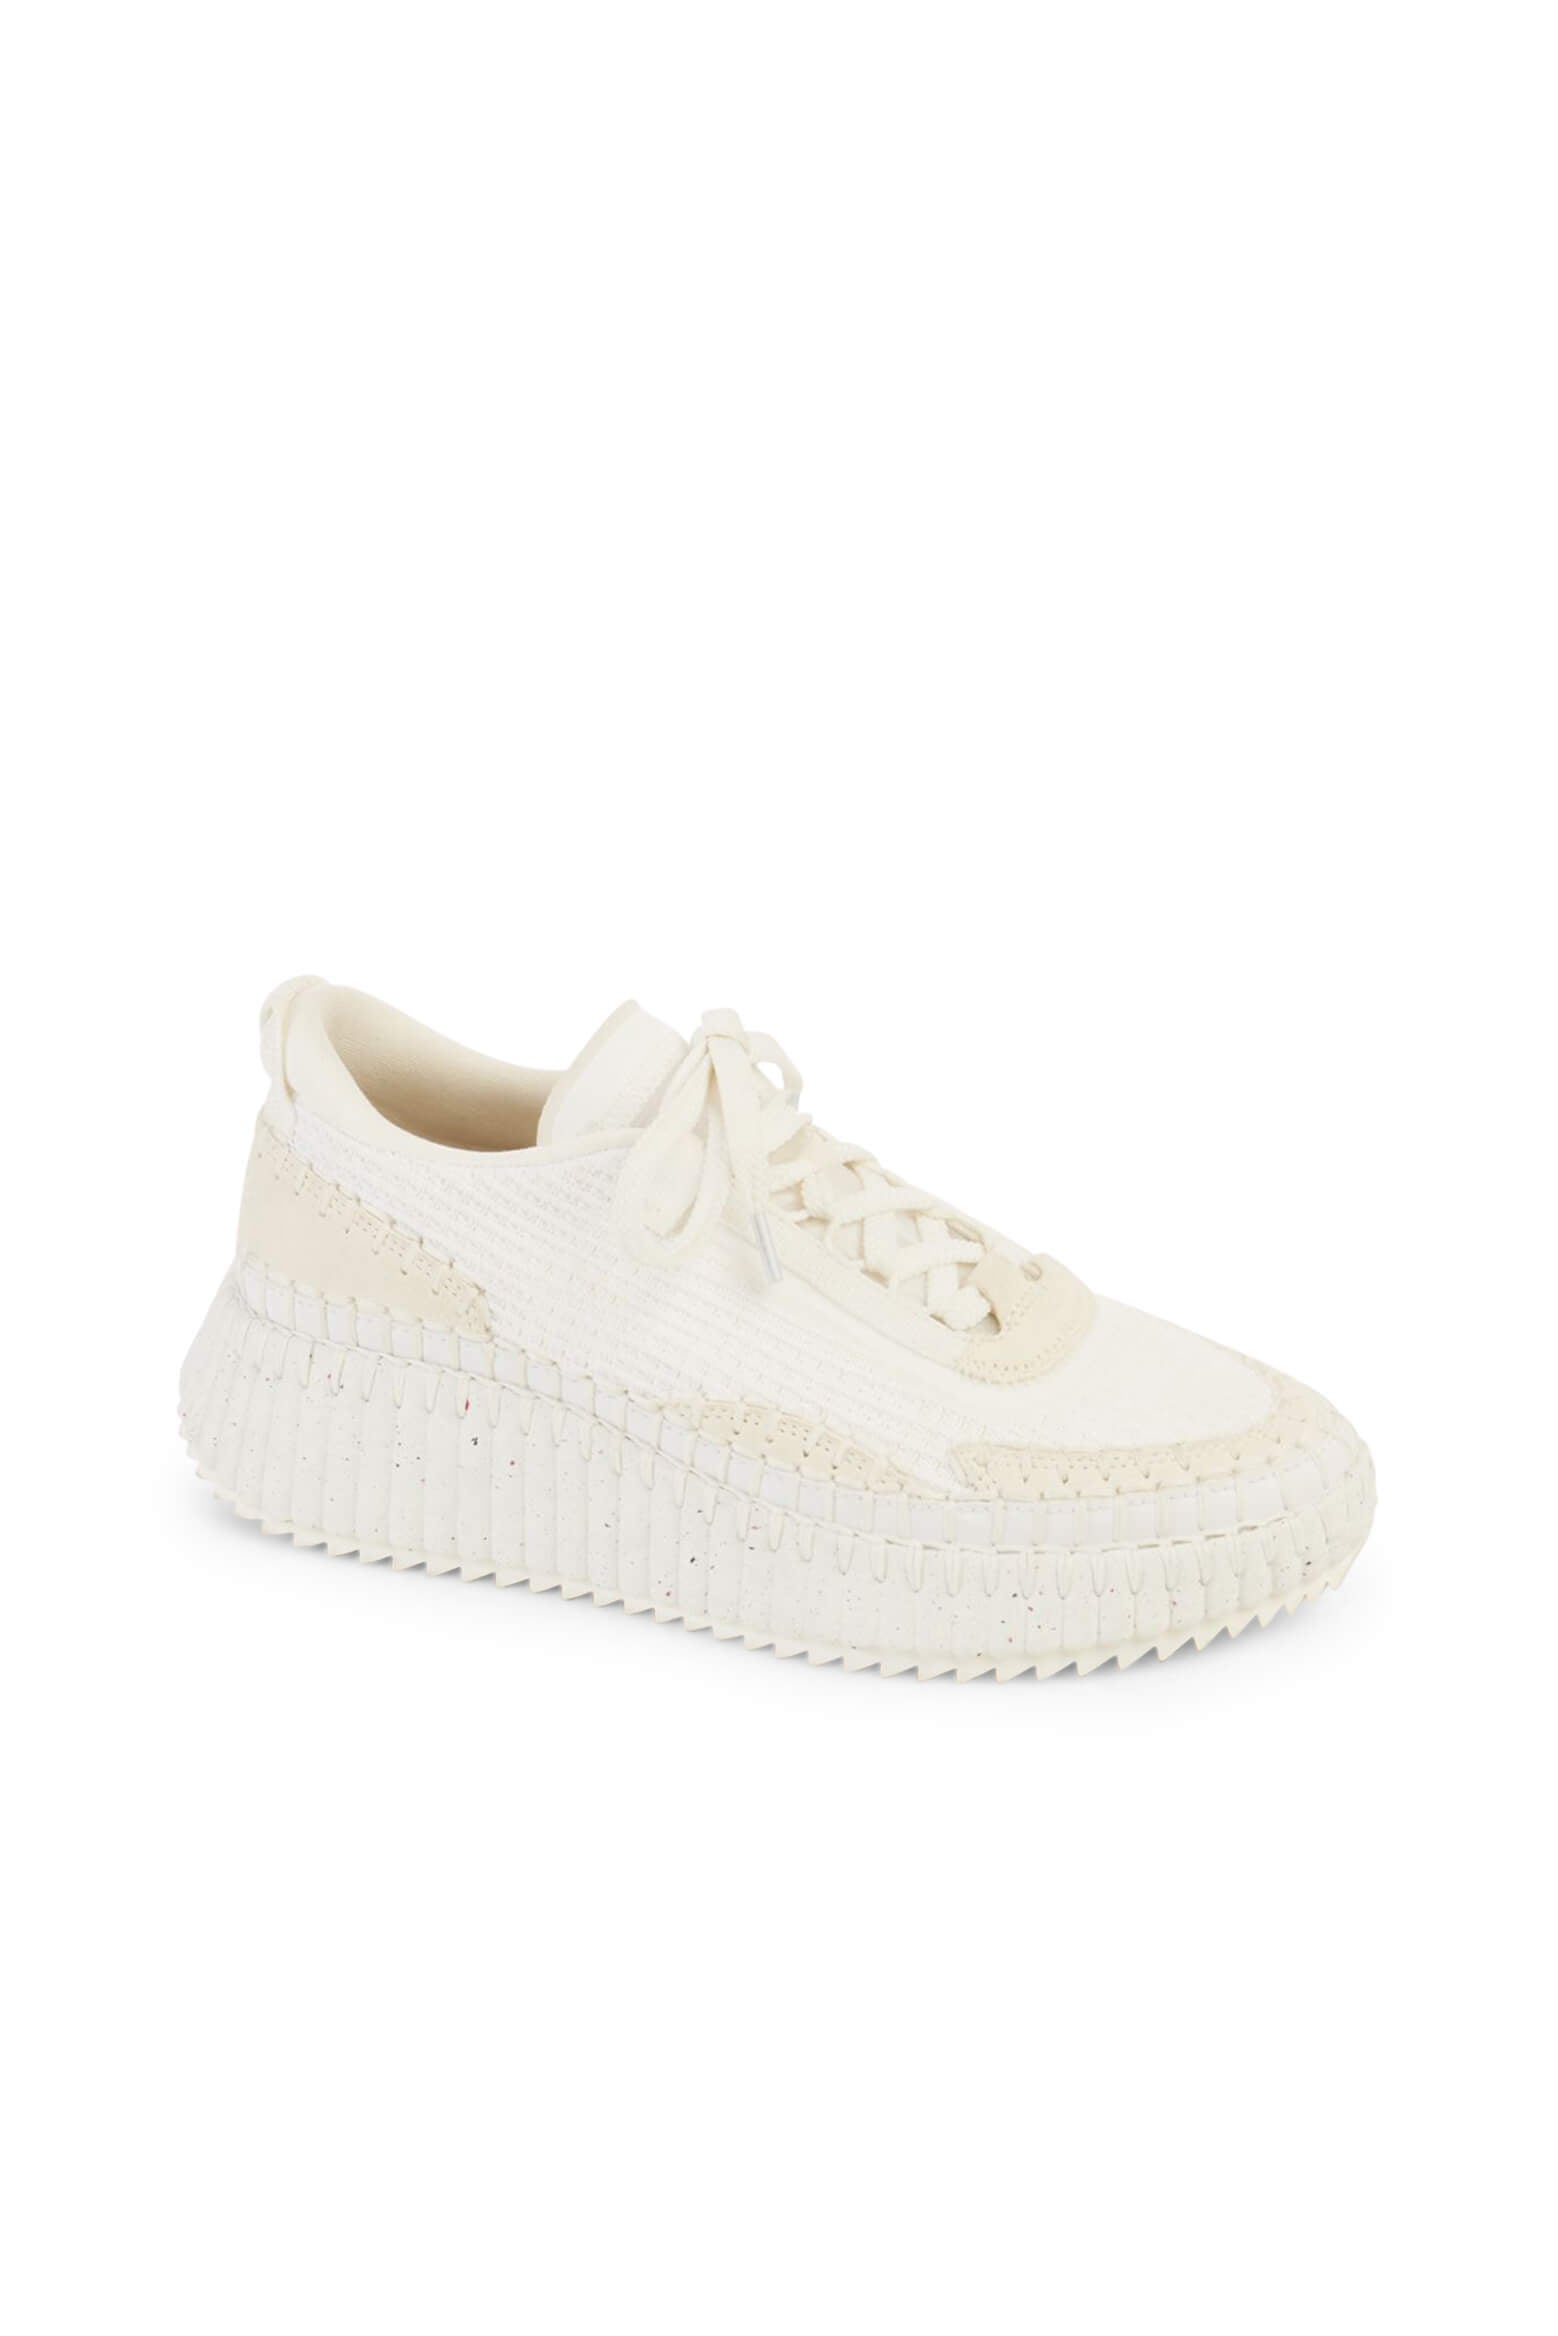 Chloe Nama Sneaker in White from The New Trend